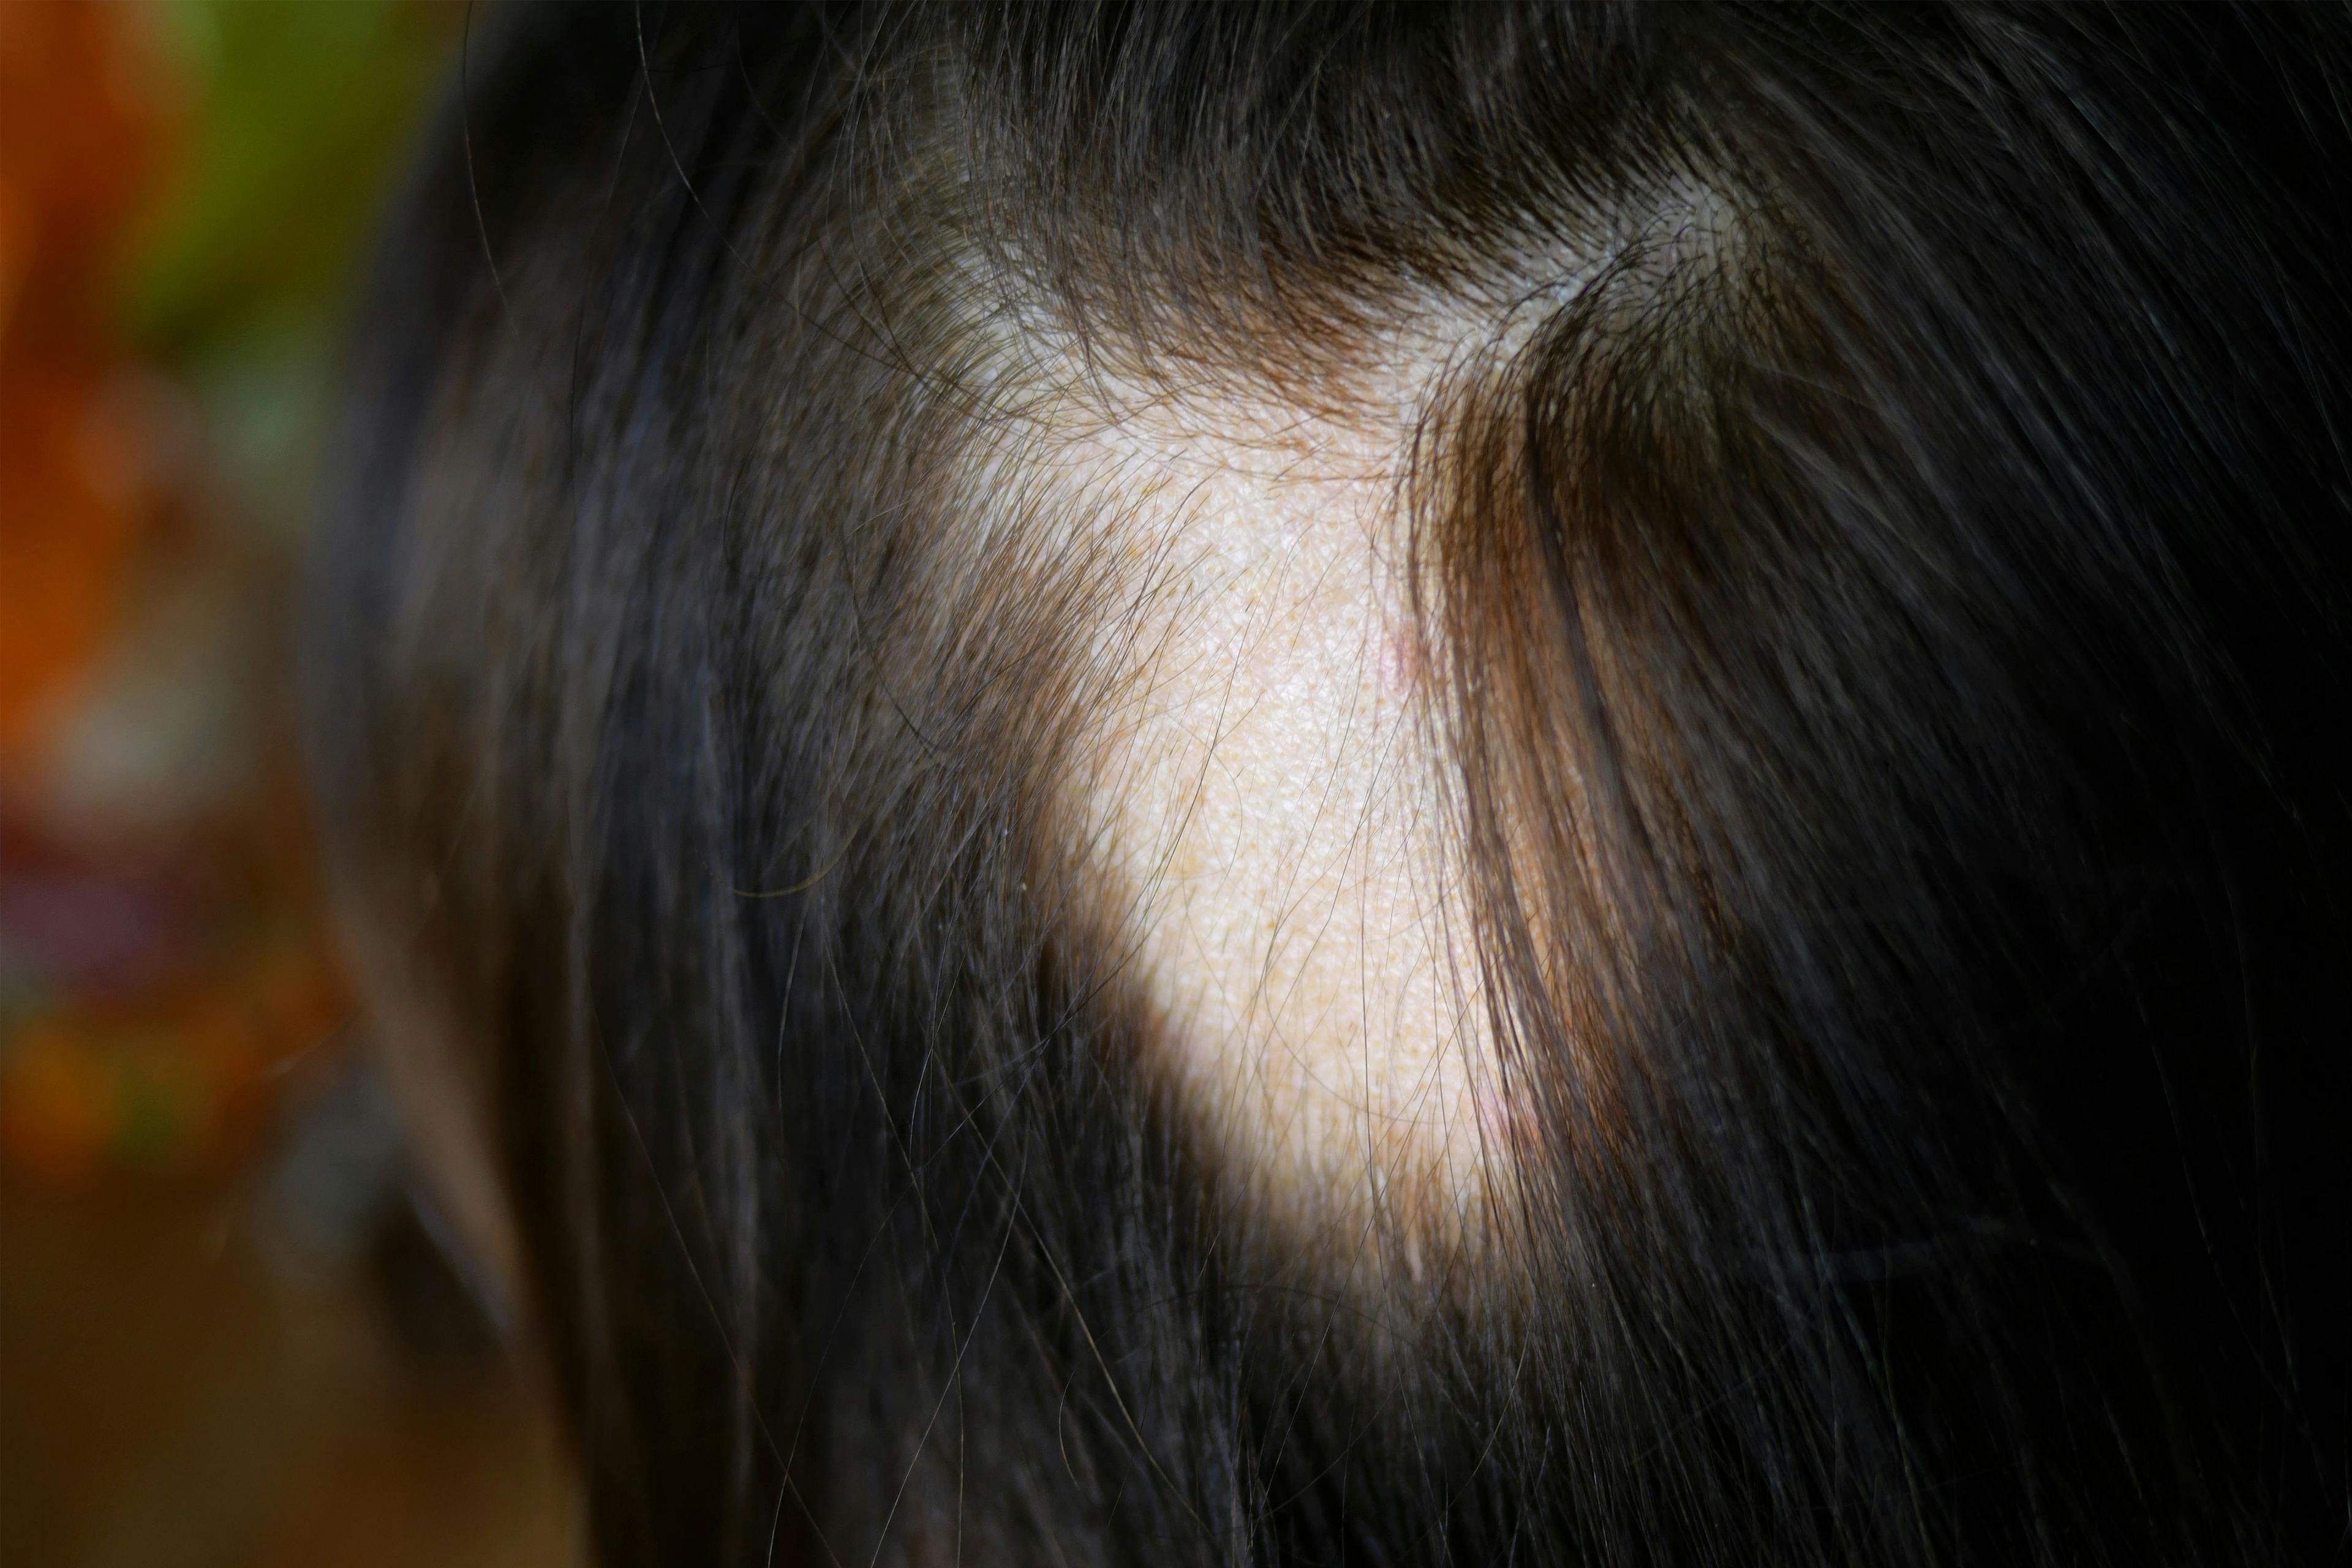 Methotrexate, Low-Dose Prednisone Efficacious in Alopecia Treatment